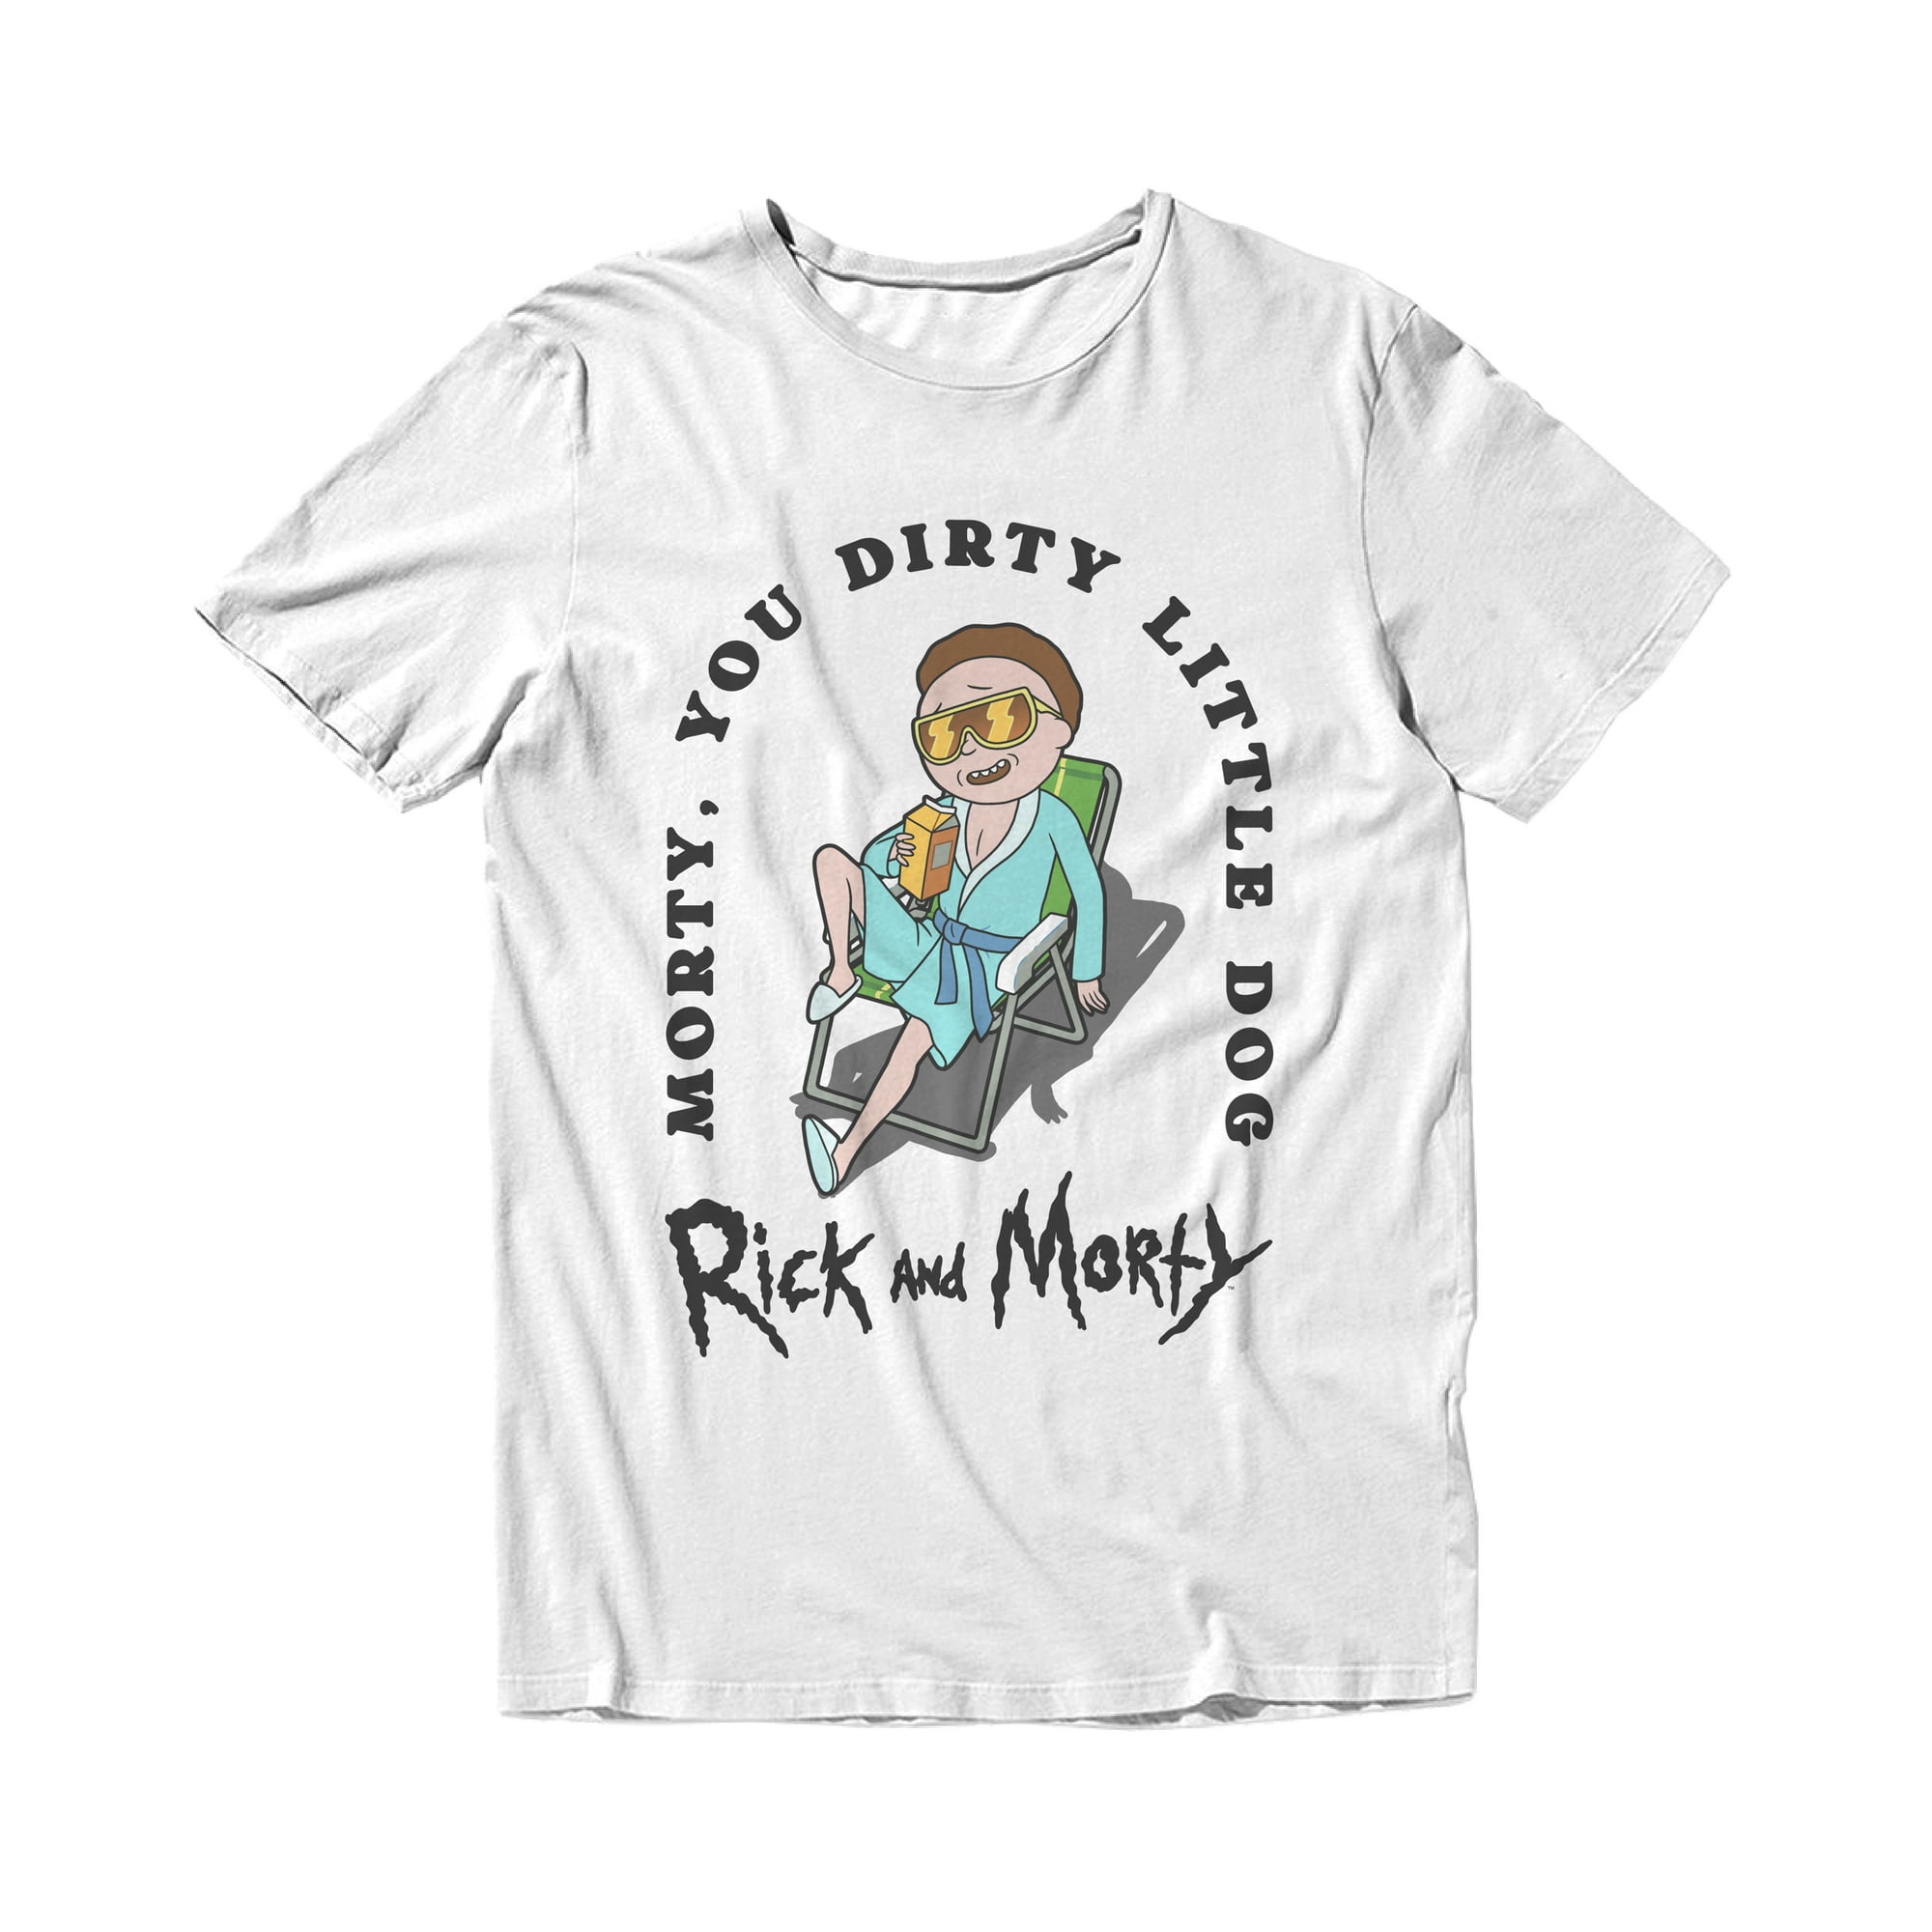 And Morty Little Dog Mens Womens Short Sleeve T-Shirt (White, S-XXL) - Walmart.com